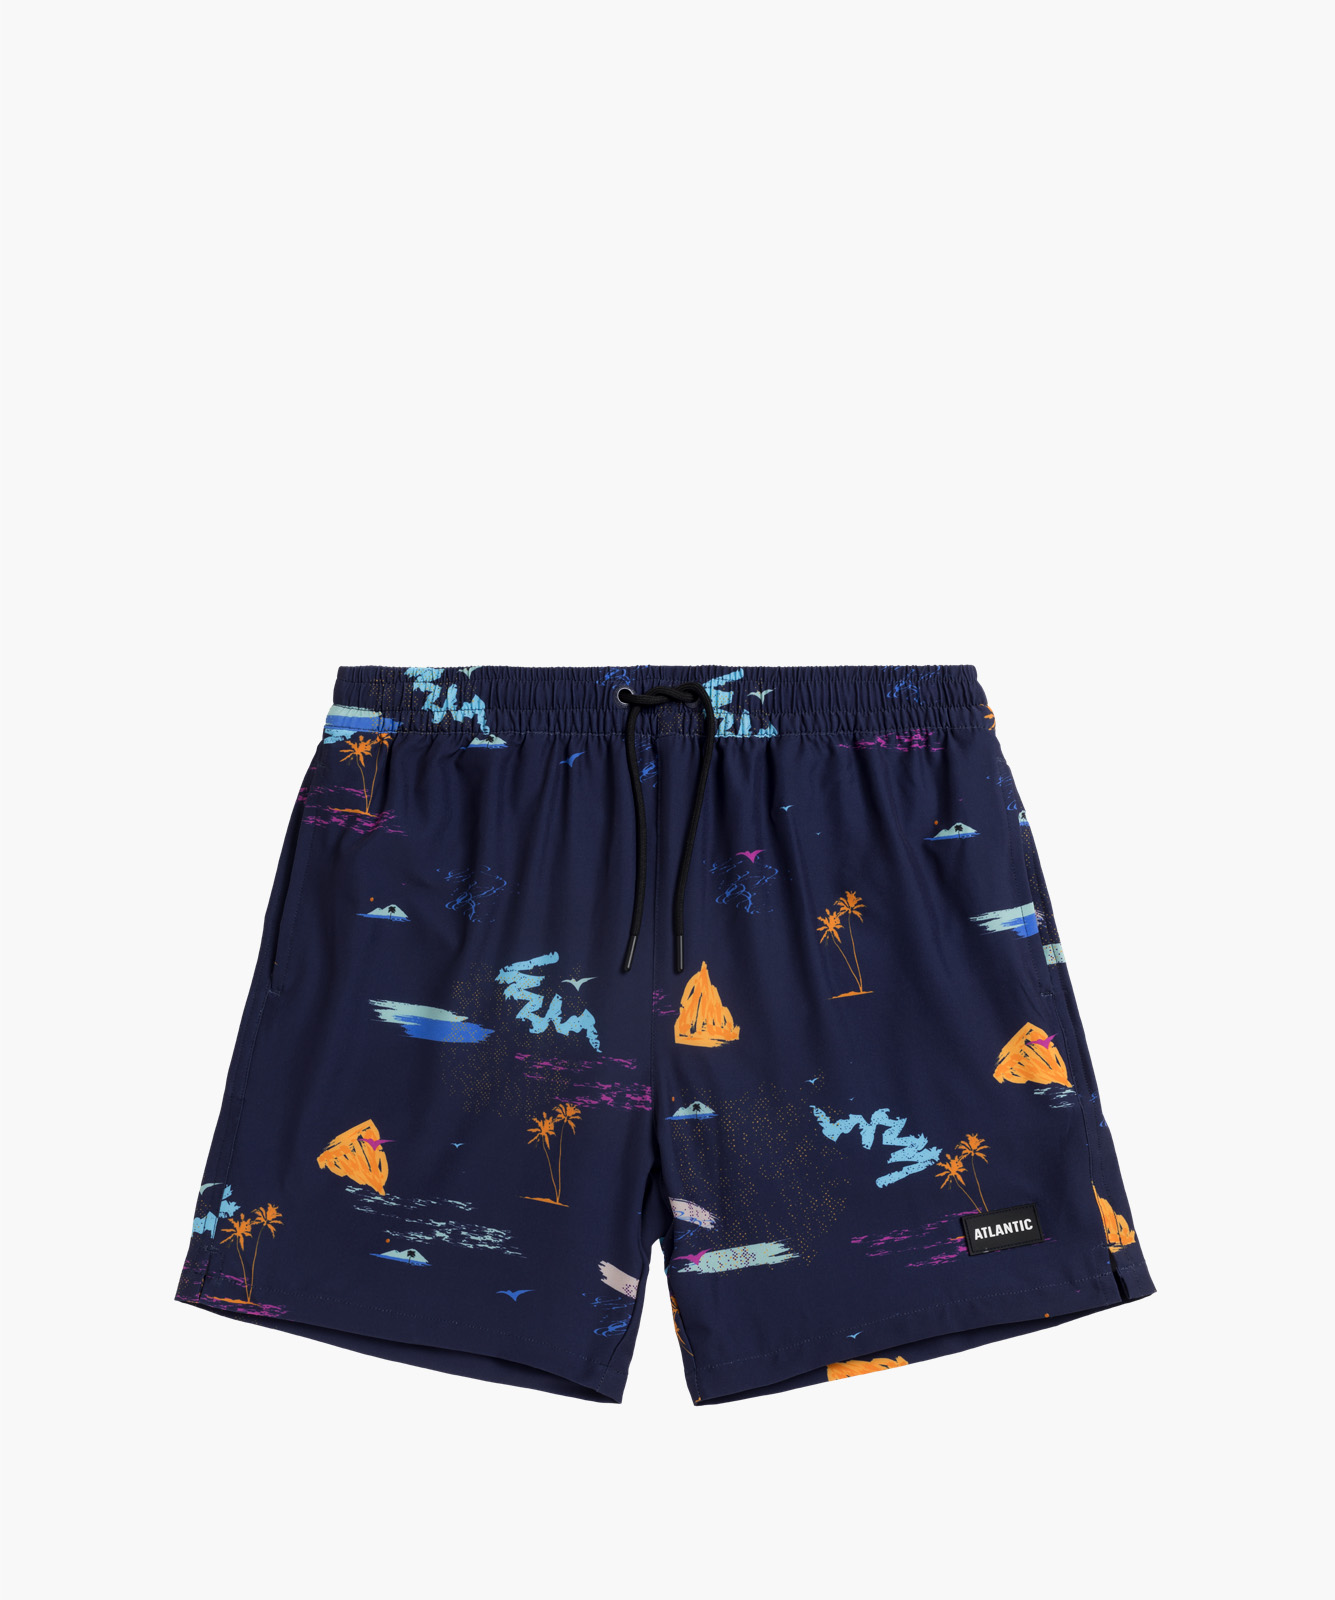 Men's beach shorts ATLANTIC - navy blue with pattern